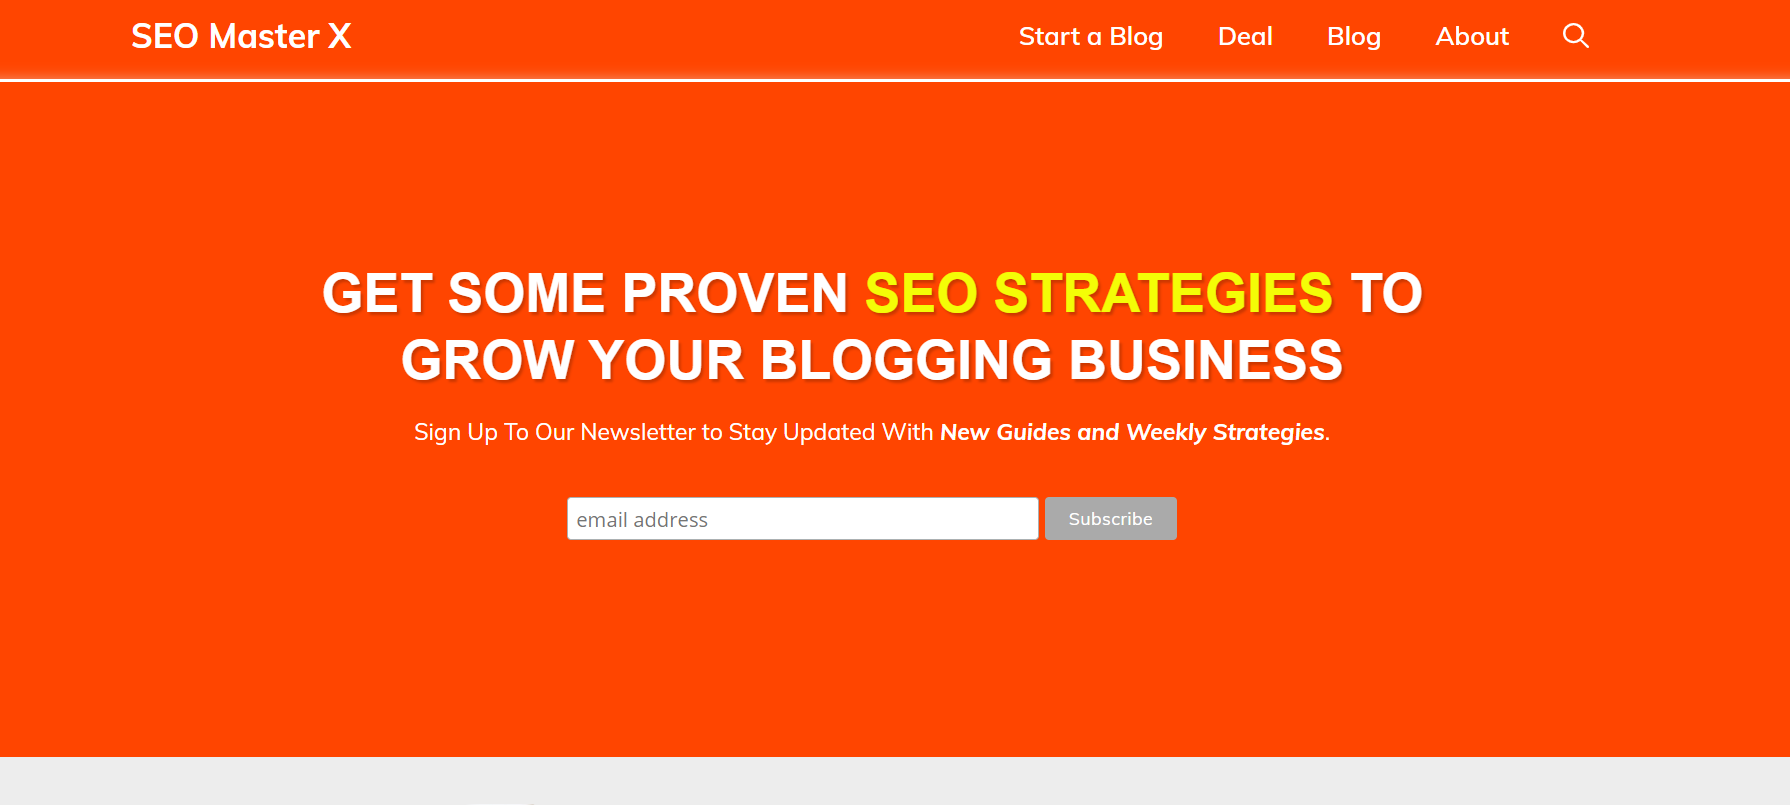 seo master x: blogging & seo tips - IndiBlogHub